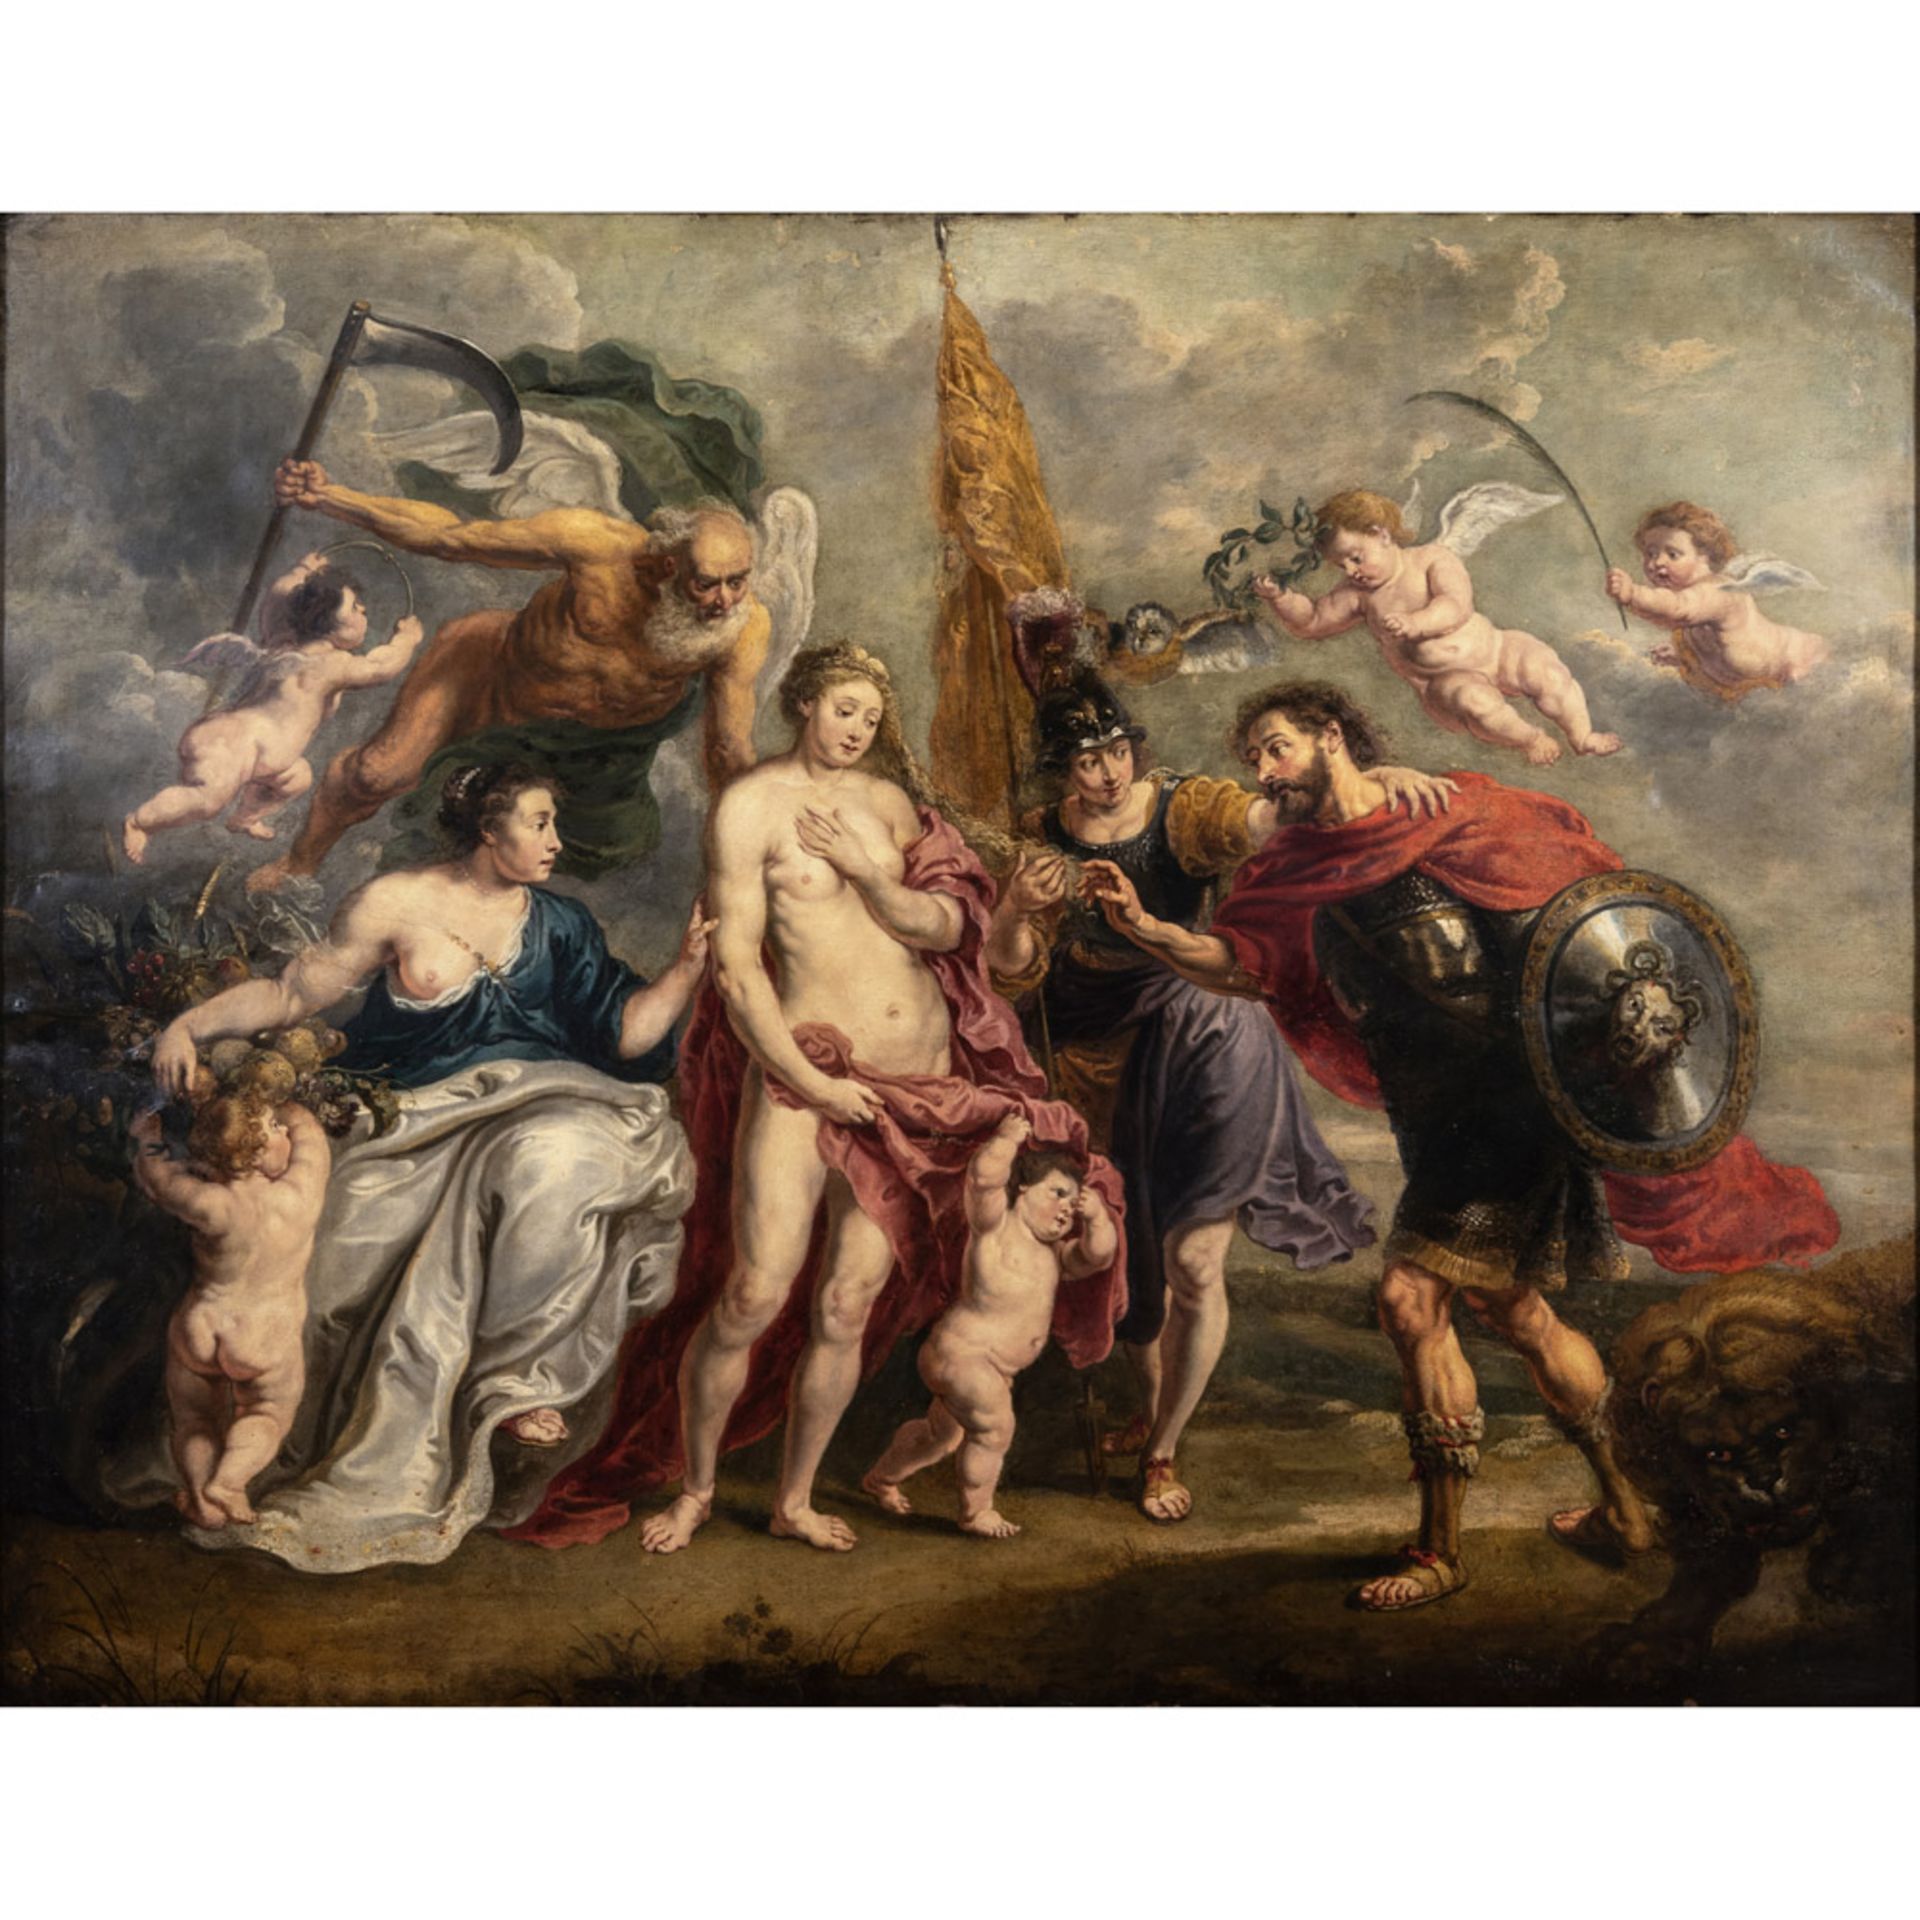 Peter Paul Rubens, follower of